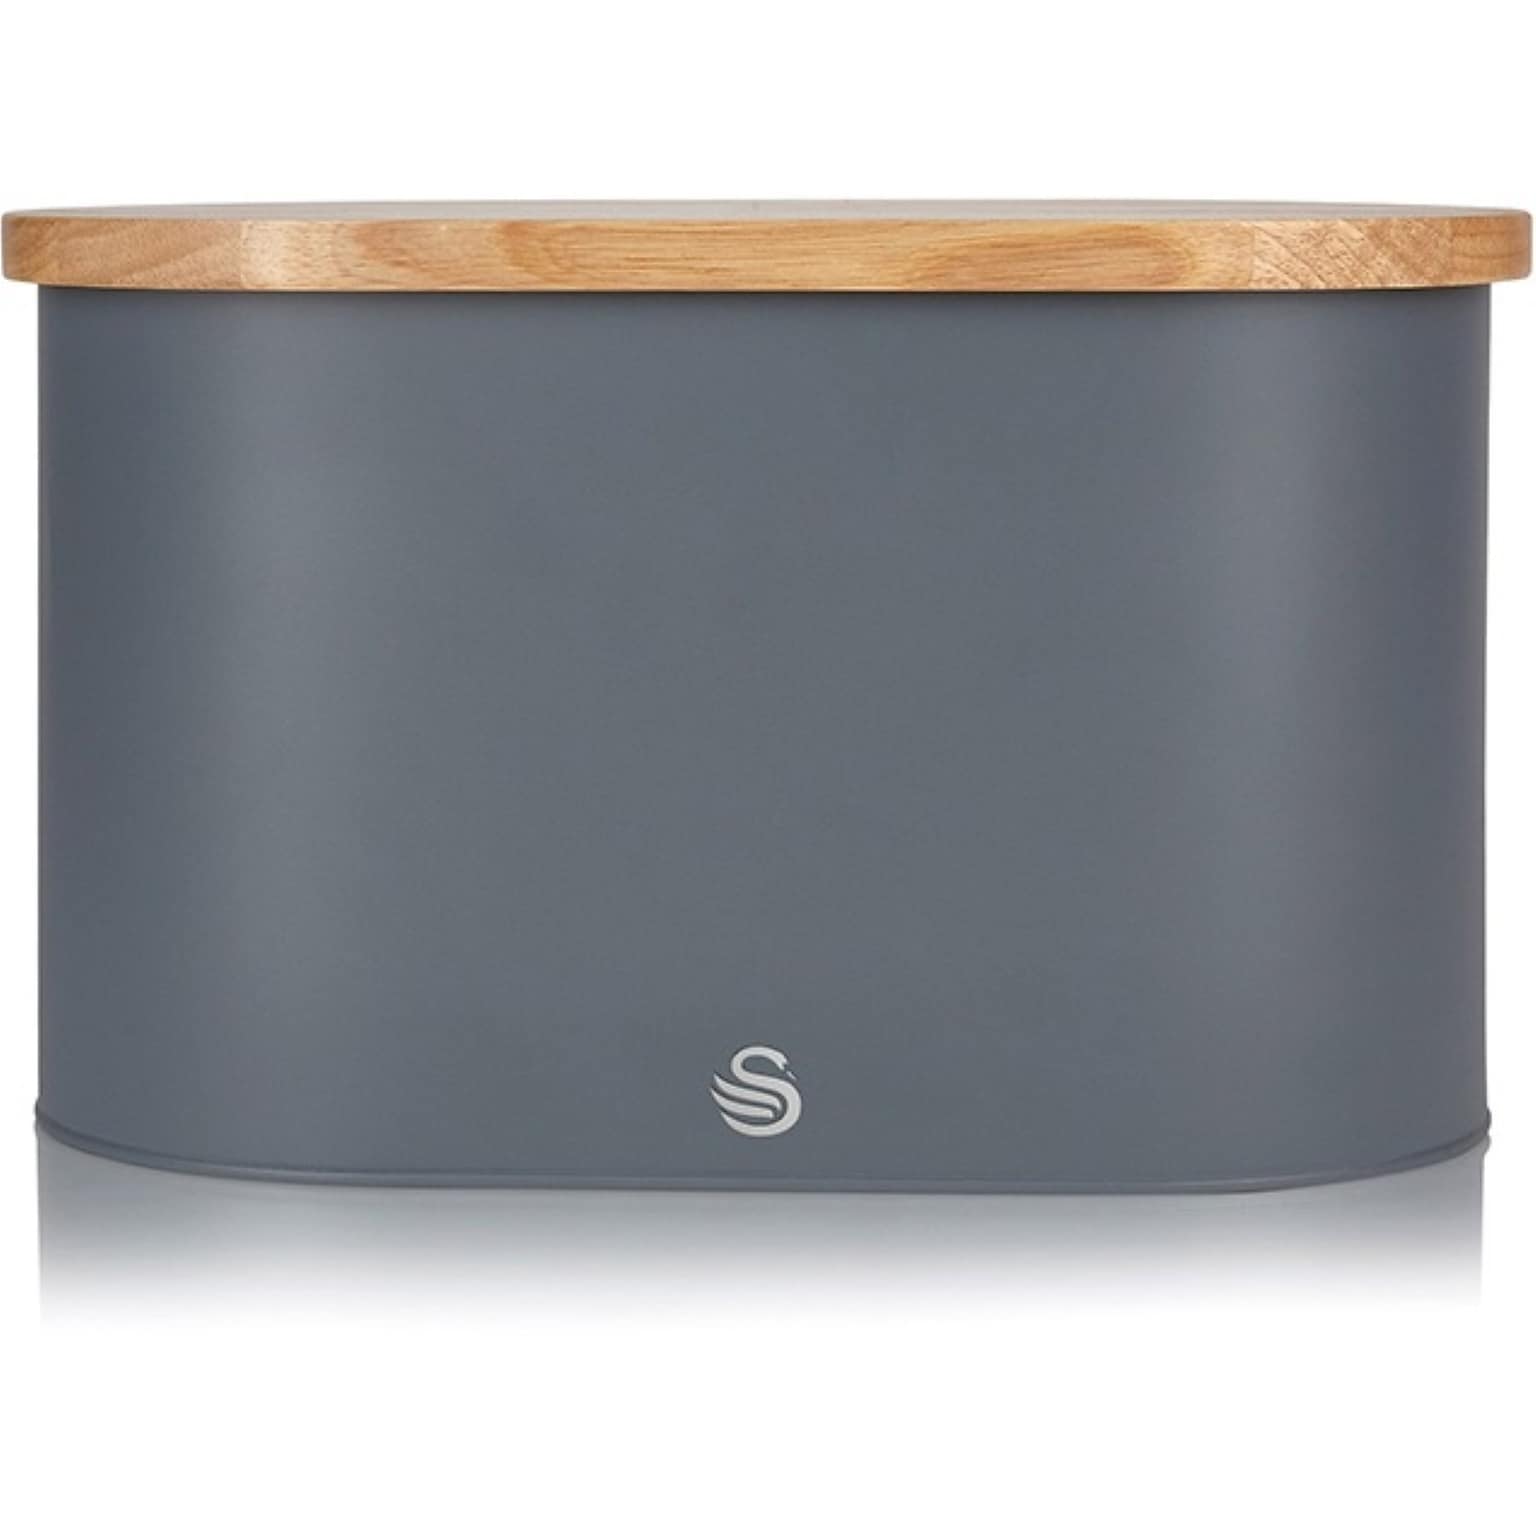 Swan Carbon Steel Container, Slate Gray (SWKA17512GRYN)